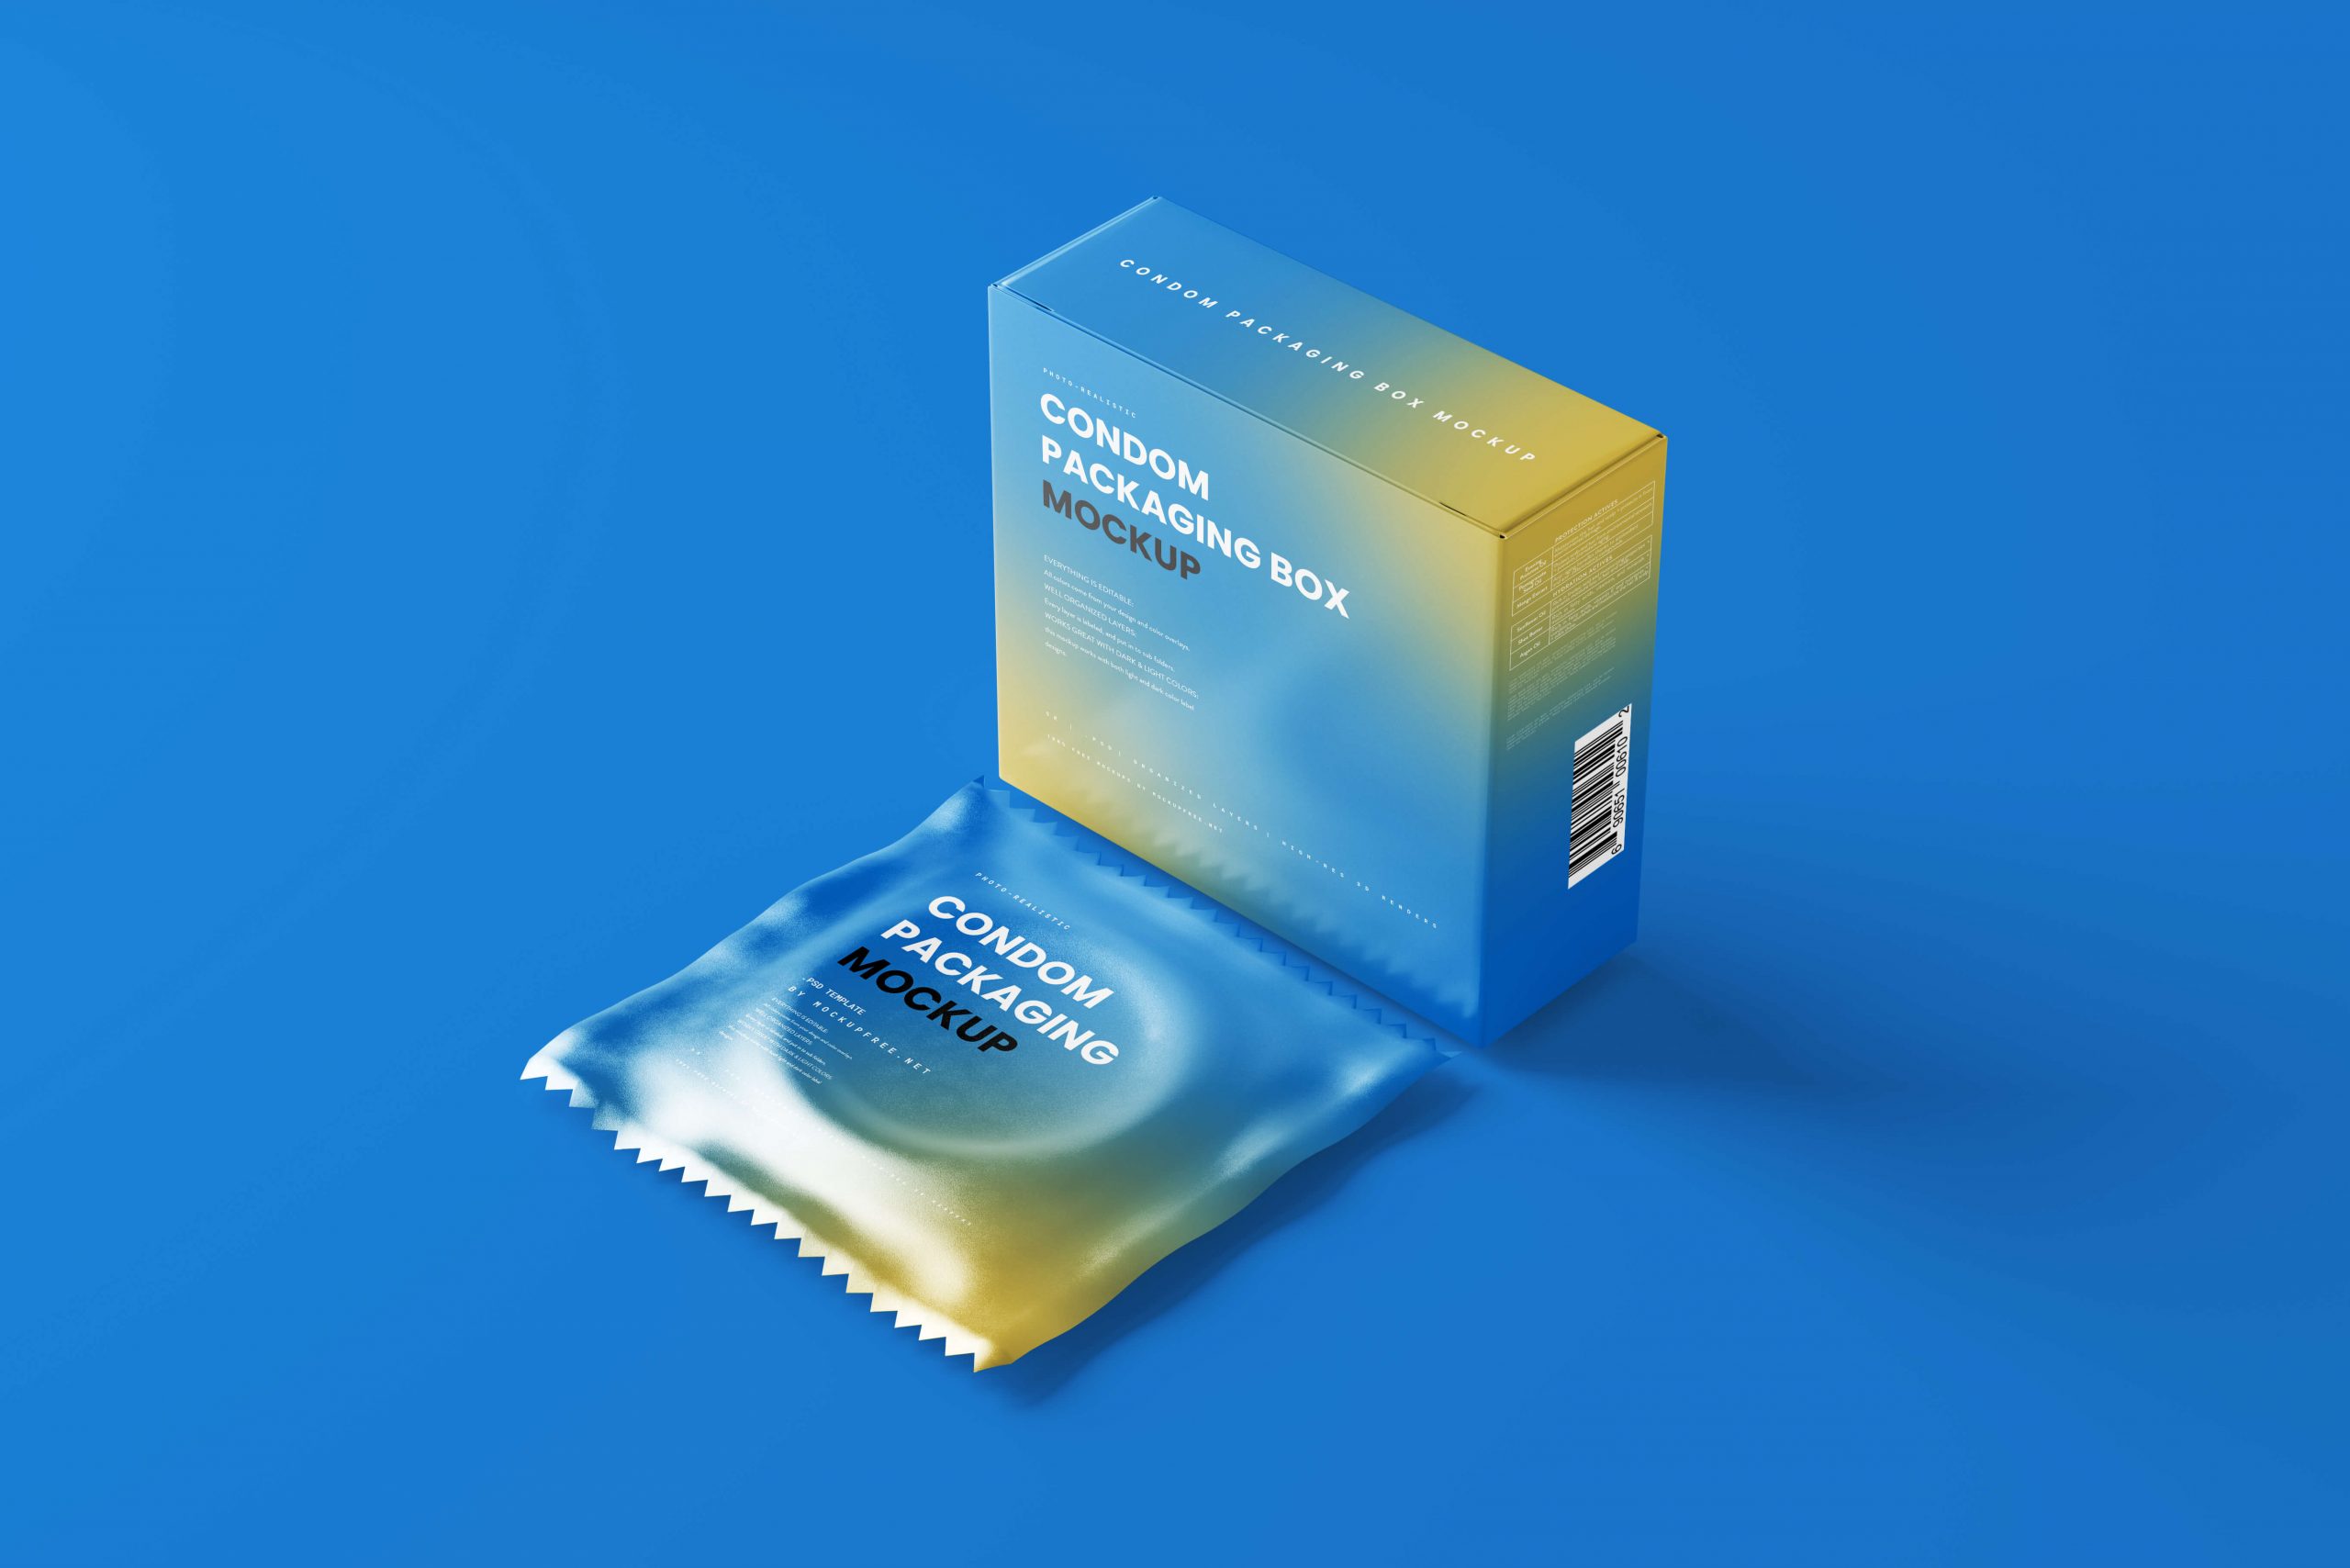 10 Free Condom Sachet Packaging Box Mockup PSD Files2